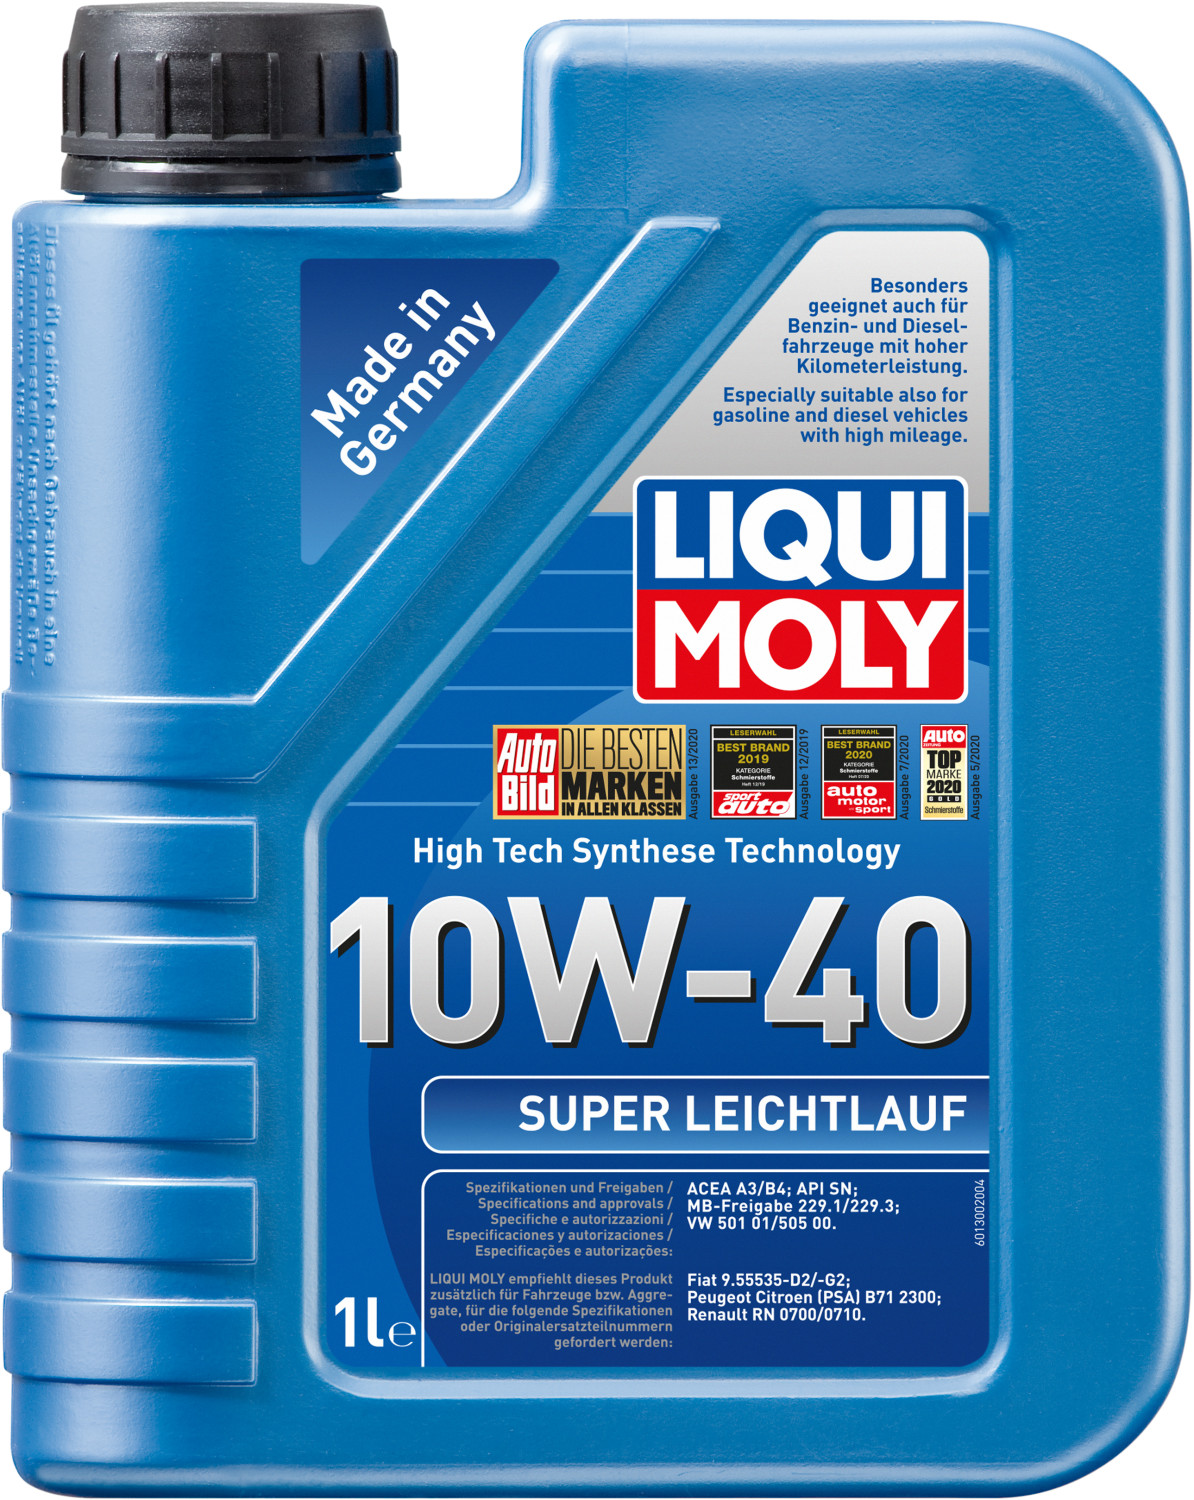 Motoröl LIQUI MOLY 1301 Super Leichtlauf 10W-40 Motorenöl Motor Öl 5 Liter  ❤️ Retromotion